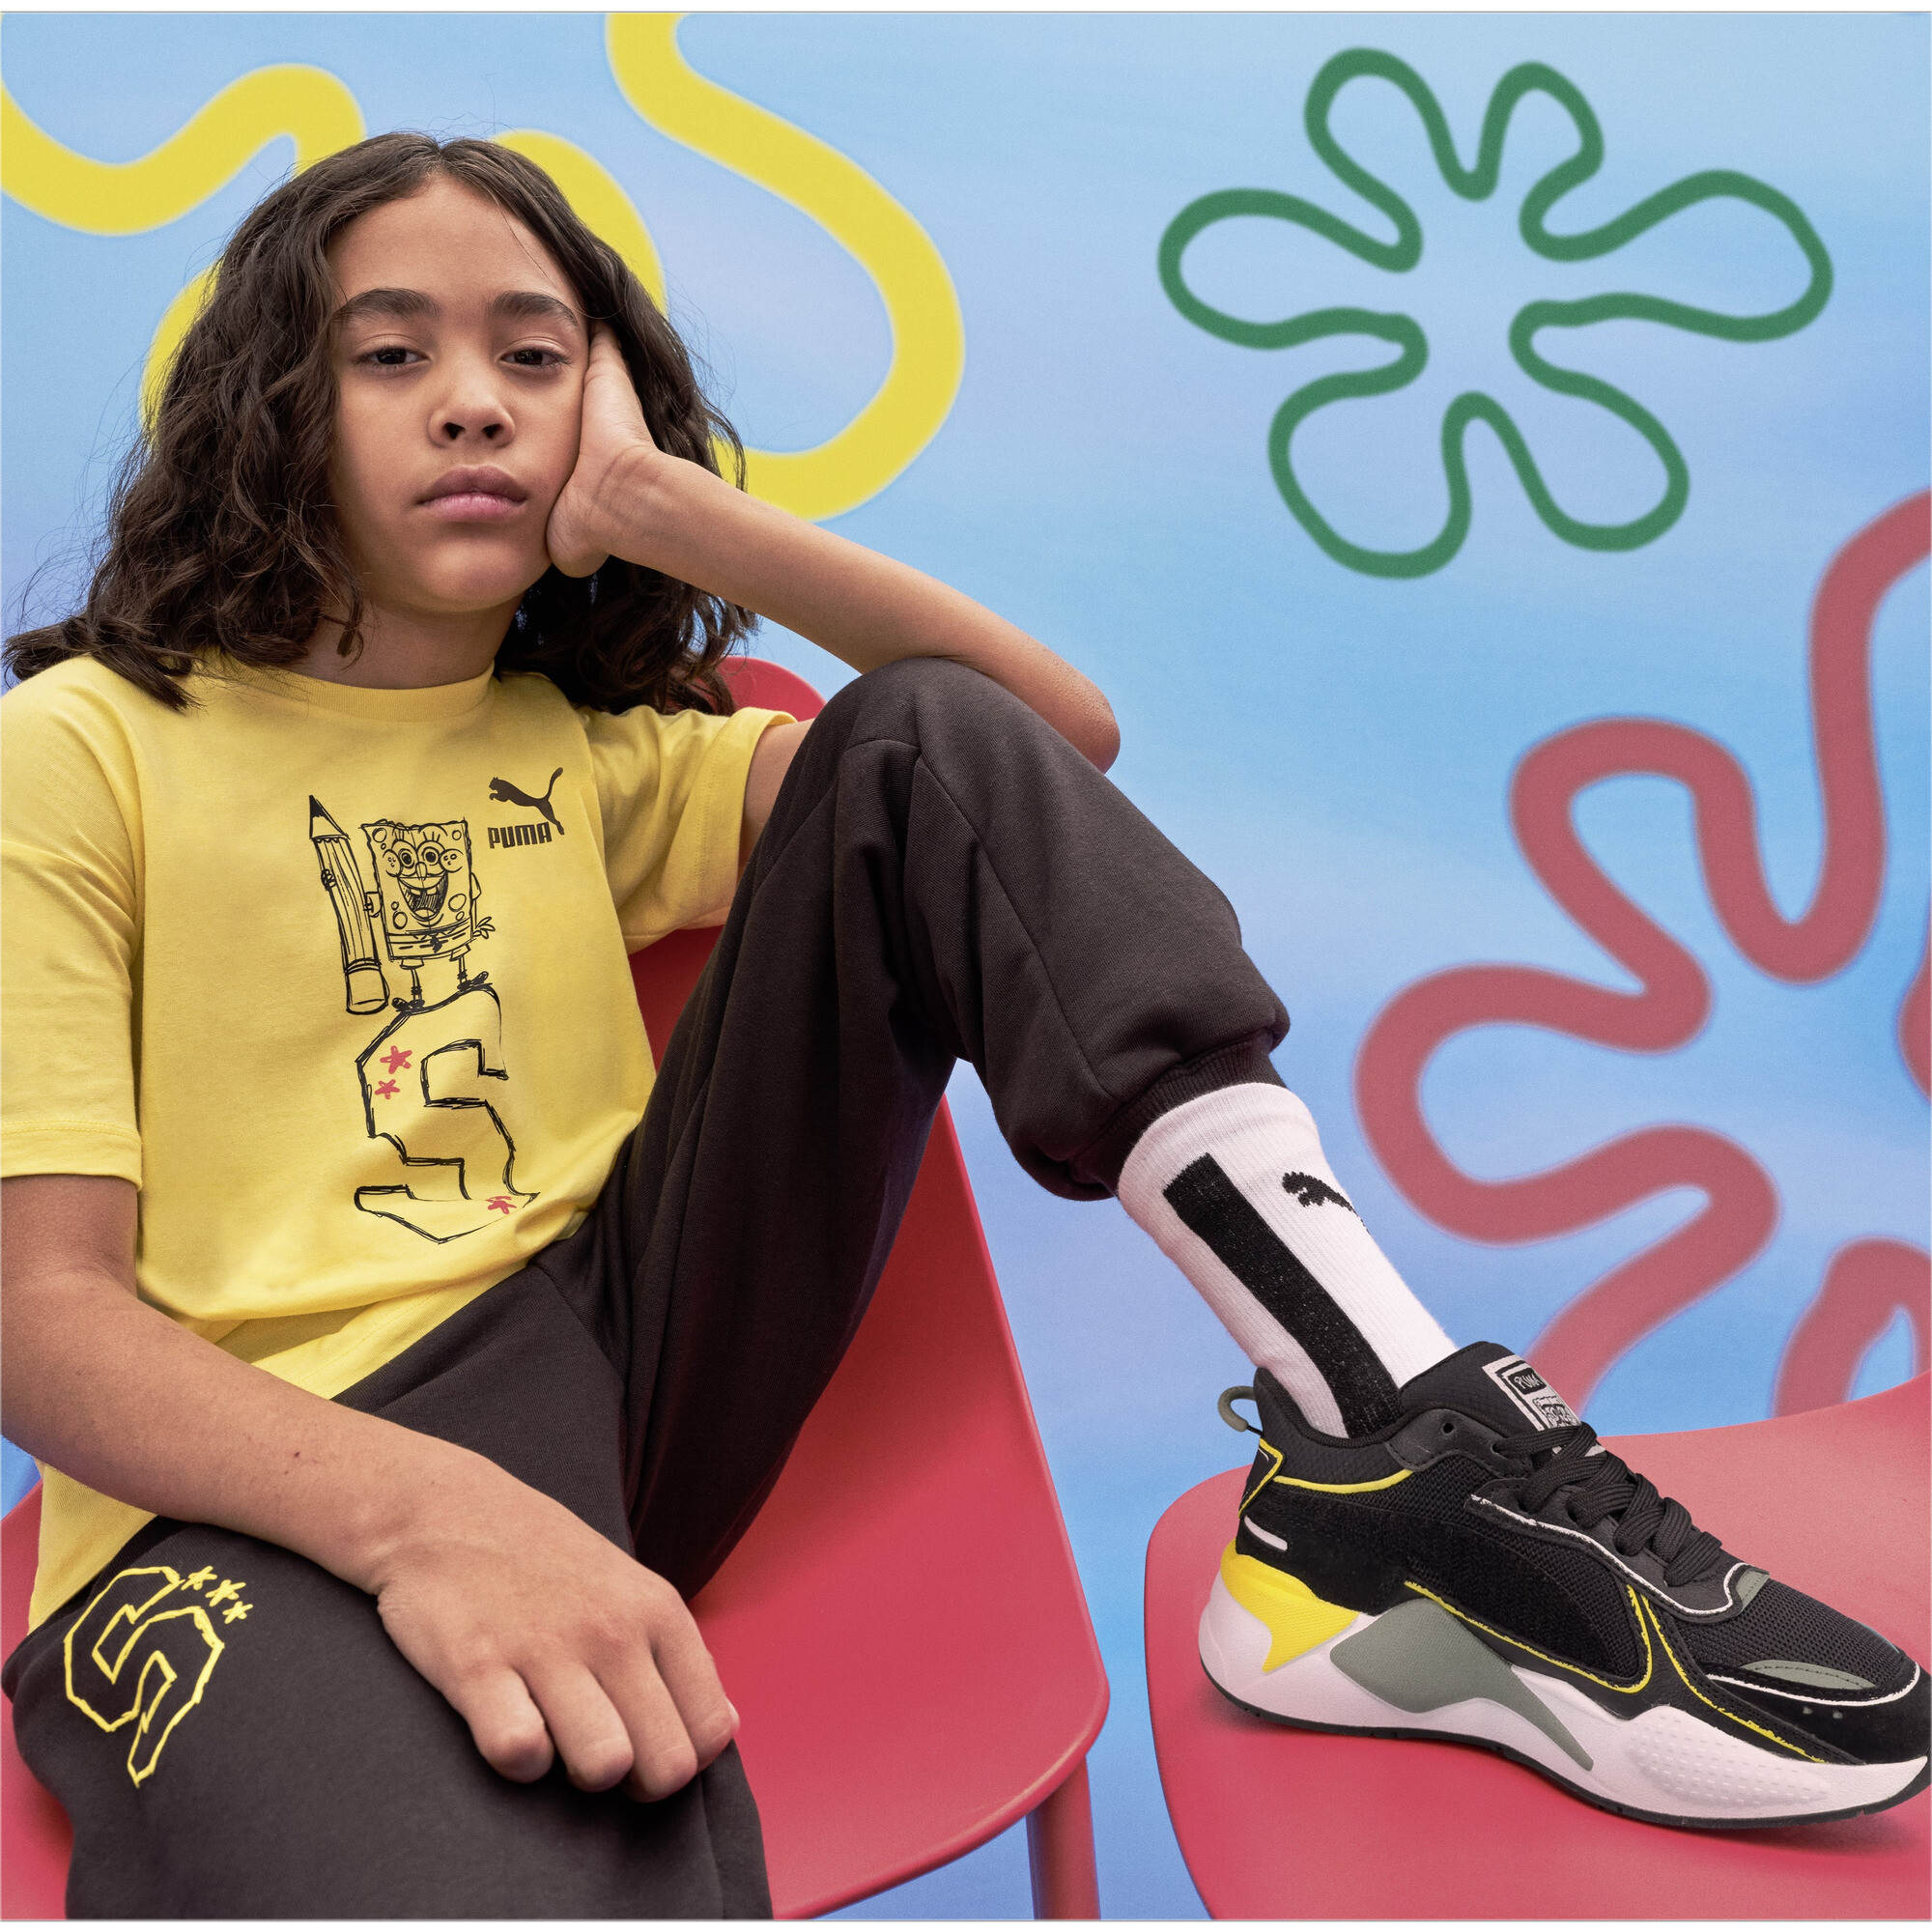 Kids' PUMA X SPONGEBOB SQUAREPANTS RS-X Sneakers In Black, Size EU 31